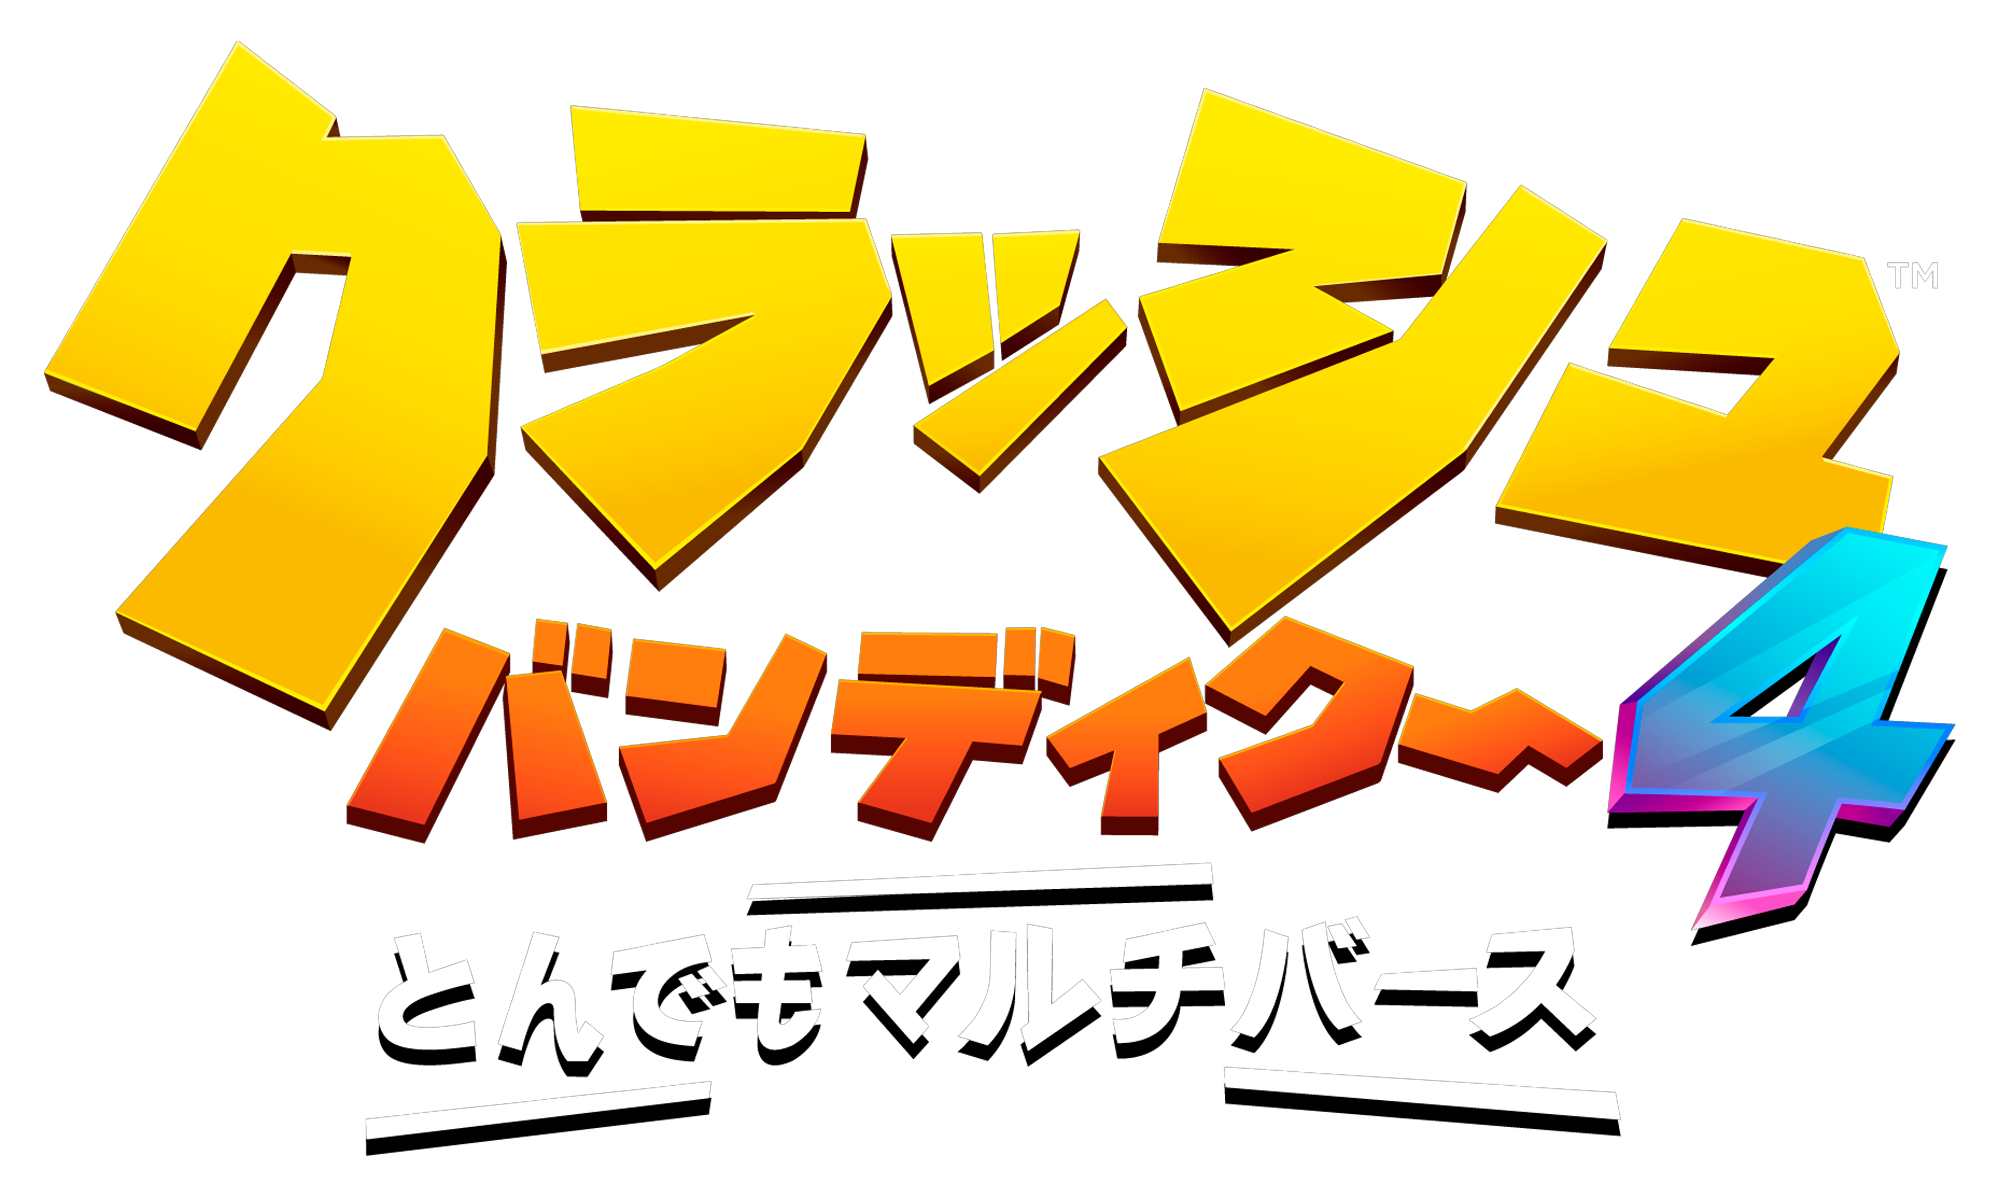 Crash Bandicoot 4: It's About Time - Title Logo (Japanese)